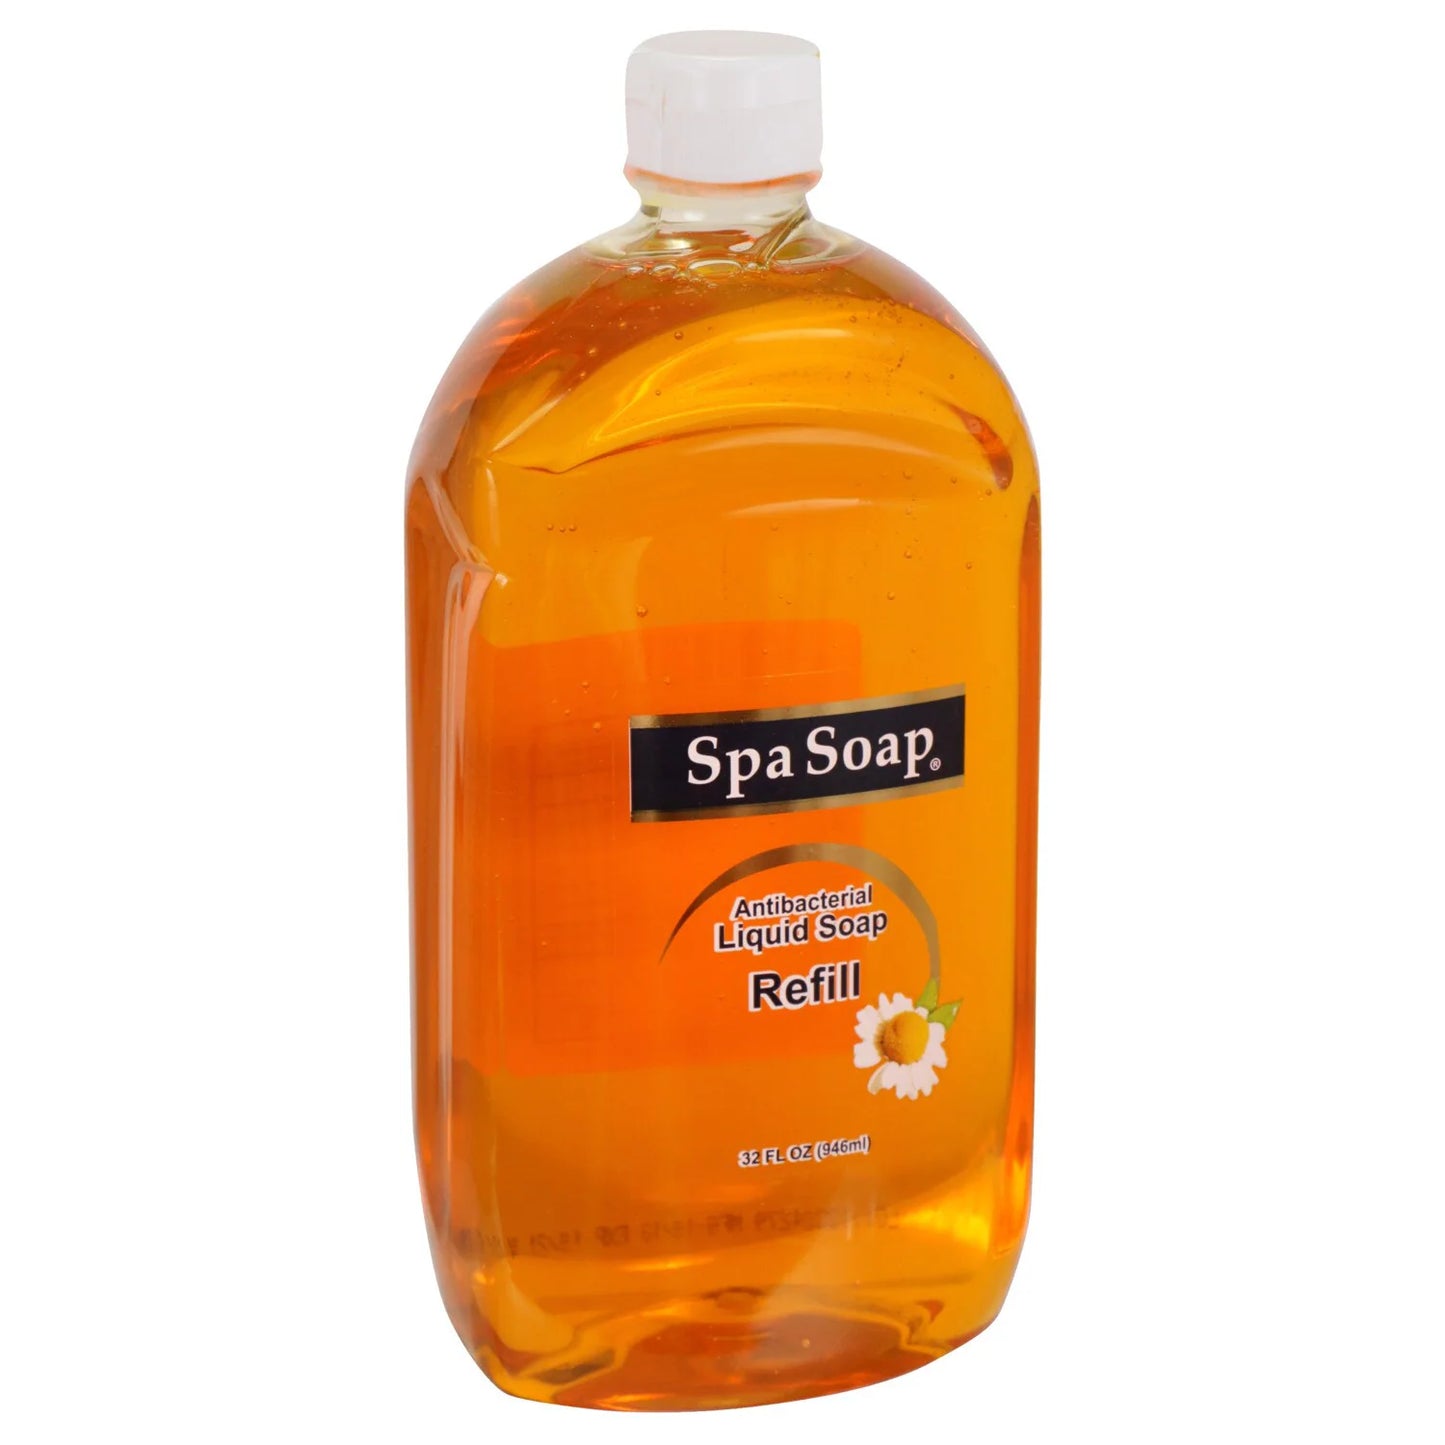 Spa Soap Antibacterial Hand Soap, 32 oz. Refill Bottles